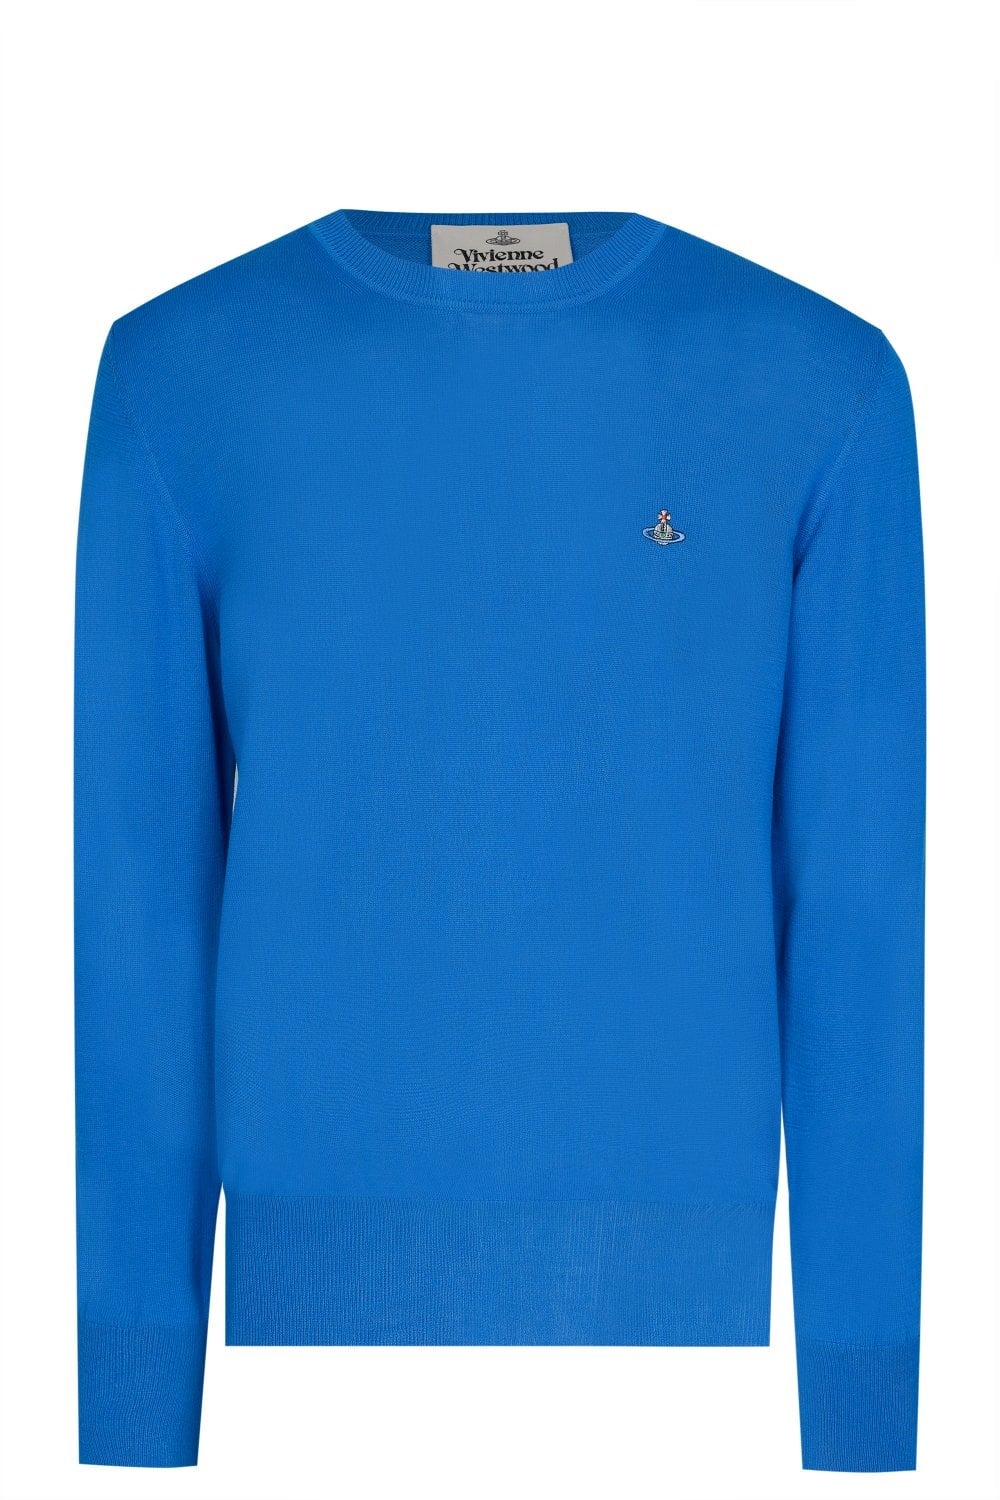 Vivienne Westwood Men's Pullover Sweatshirt Blue - L BLUE